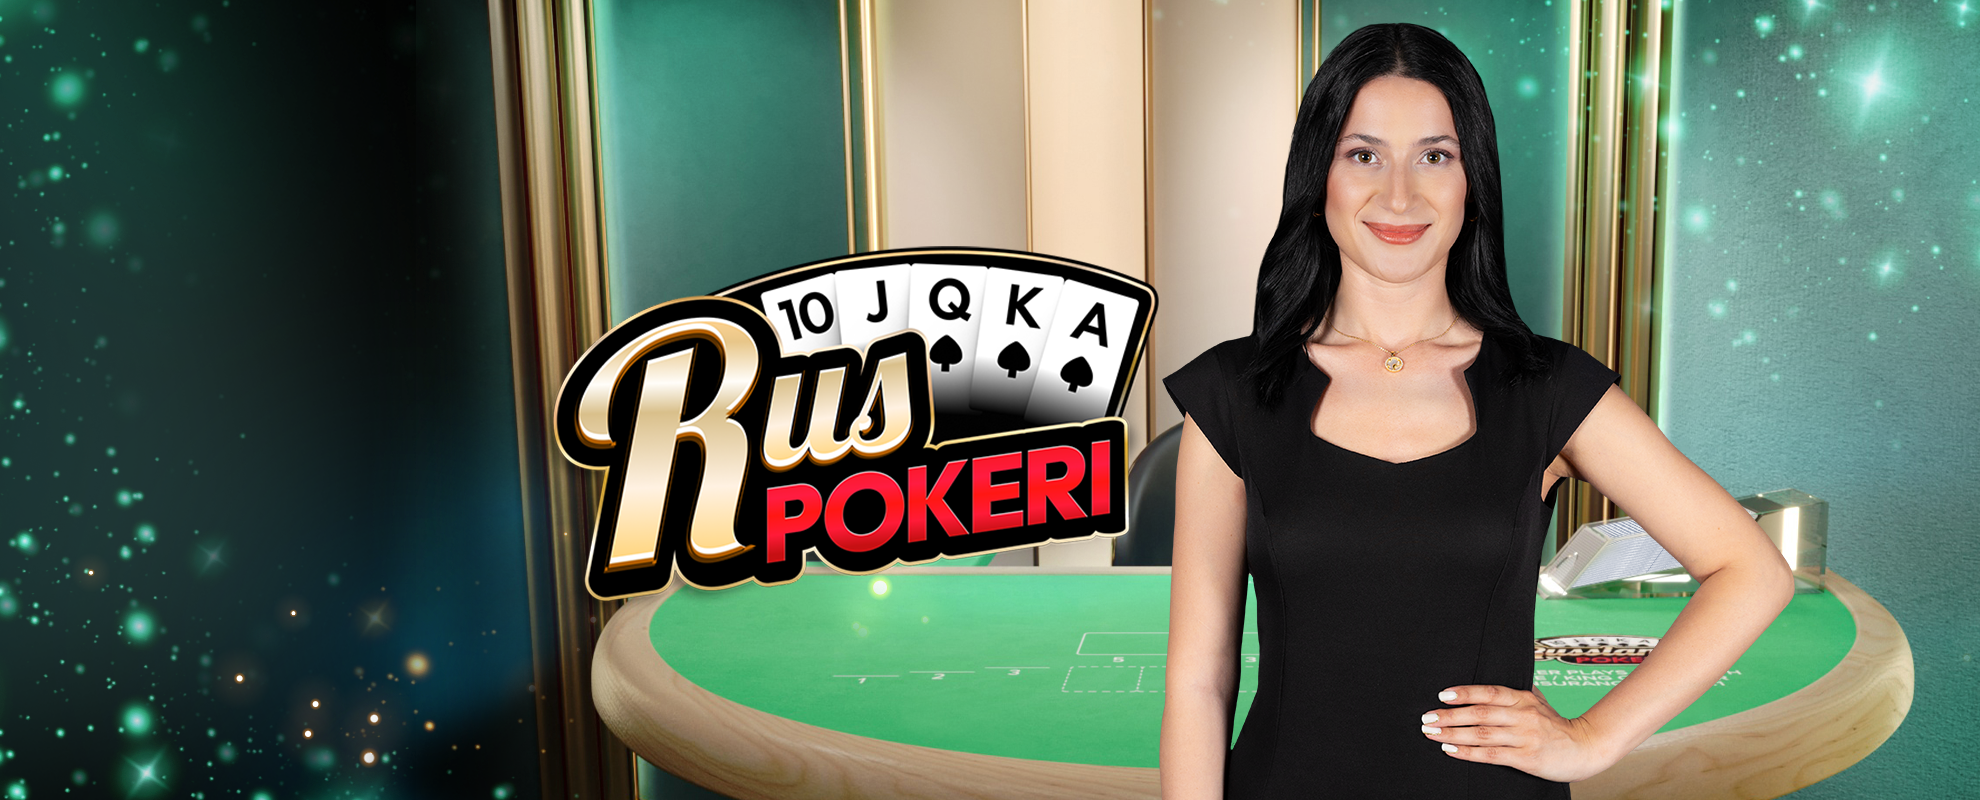 russian_poker_banner_turk_1980x800_2023_08_3.png thumbnail